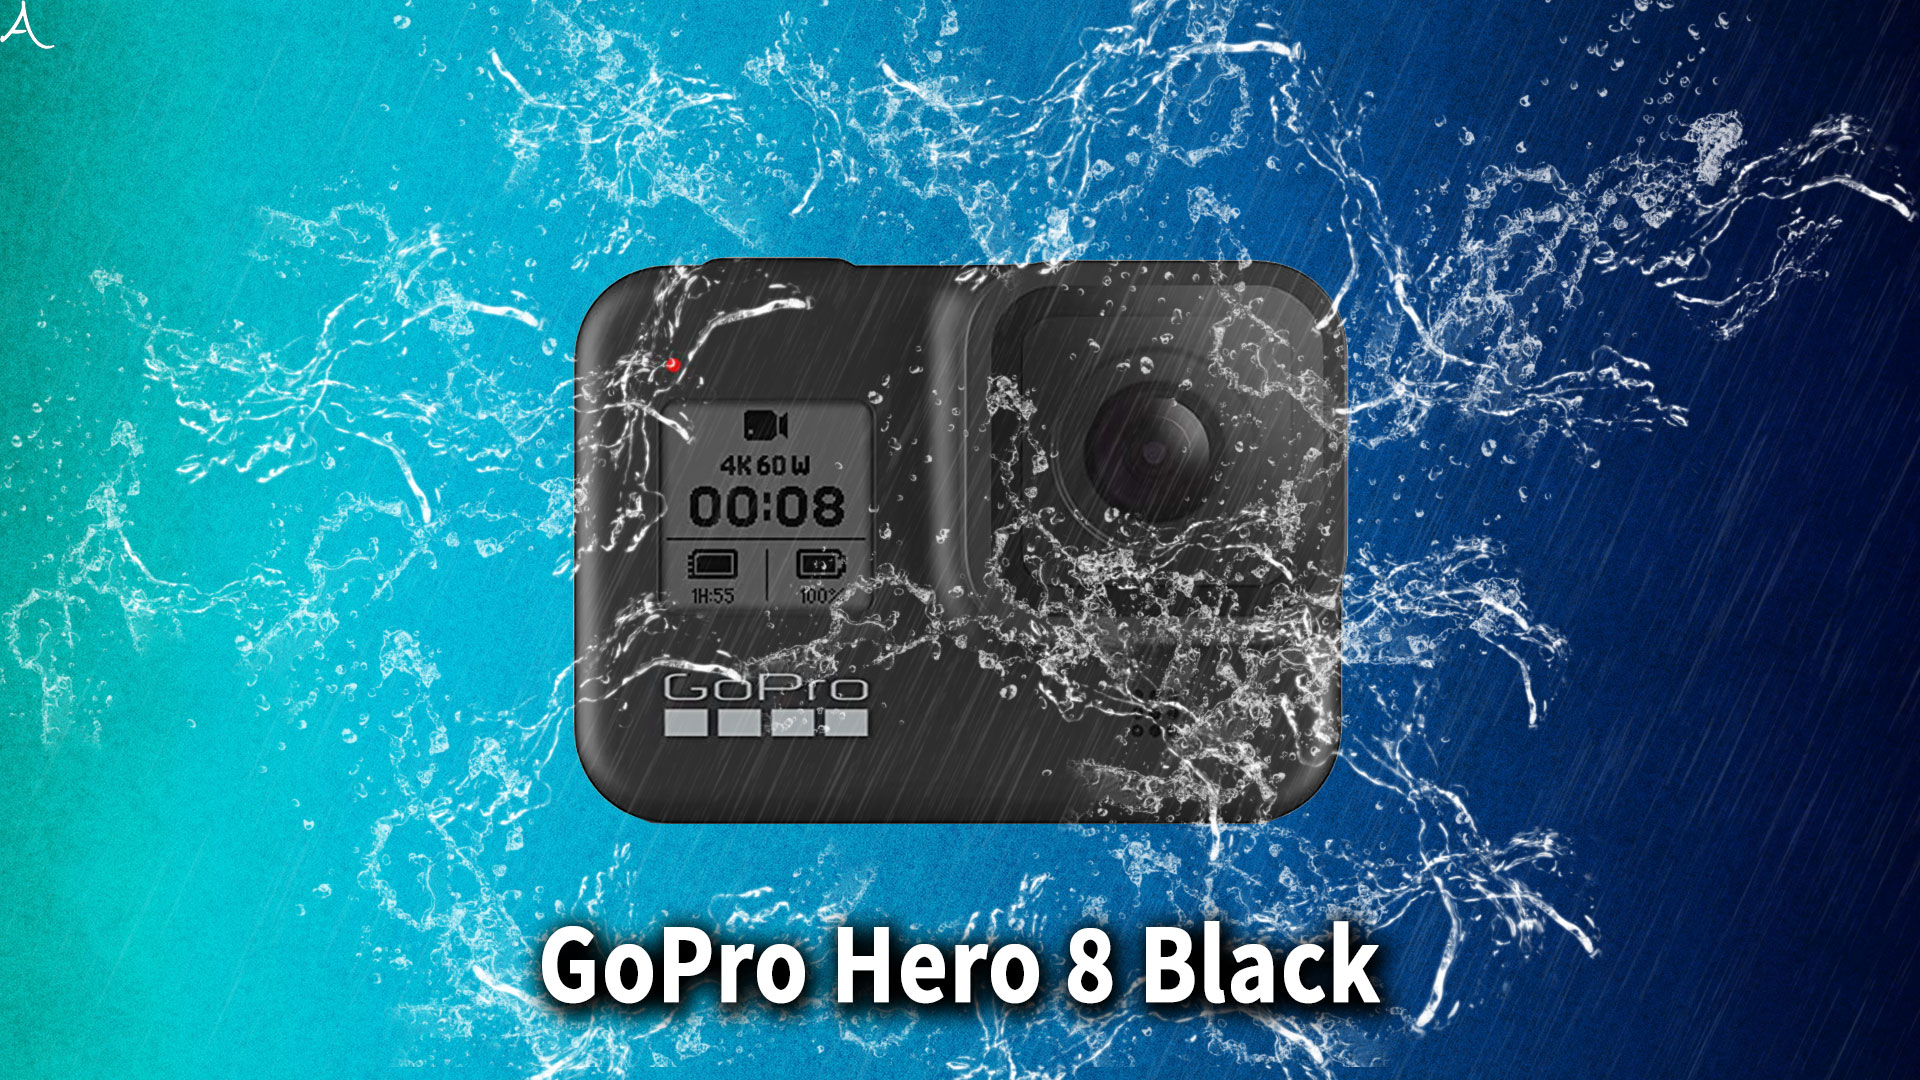 ｢GoPro Hero 8 Black｣のバッテリー持ちはどれくらい？互換性のあるおすすめのバッテリーはコレ！